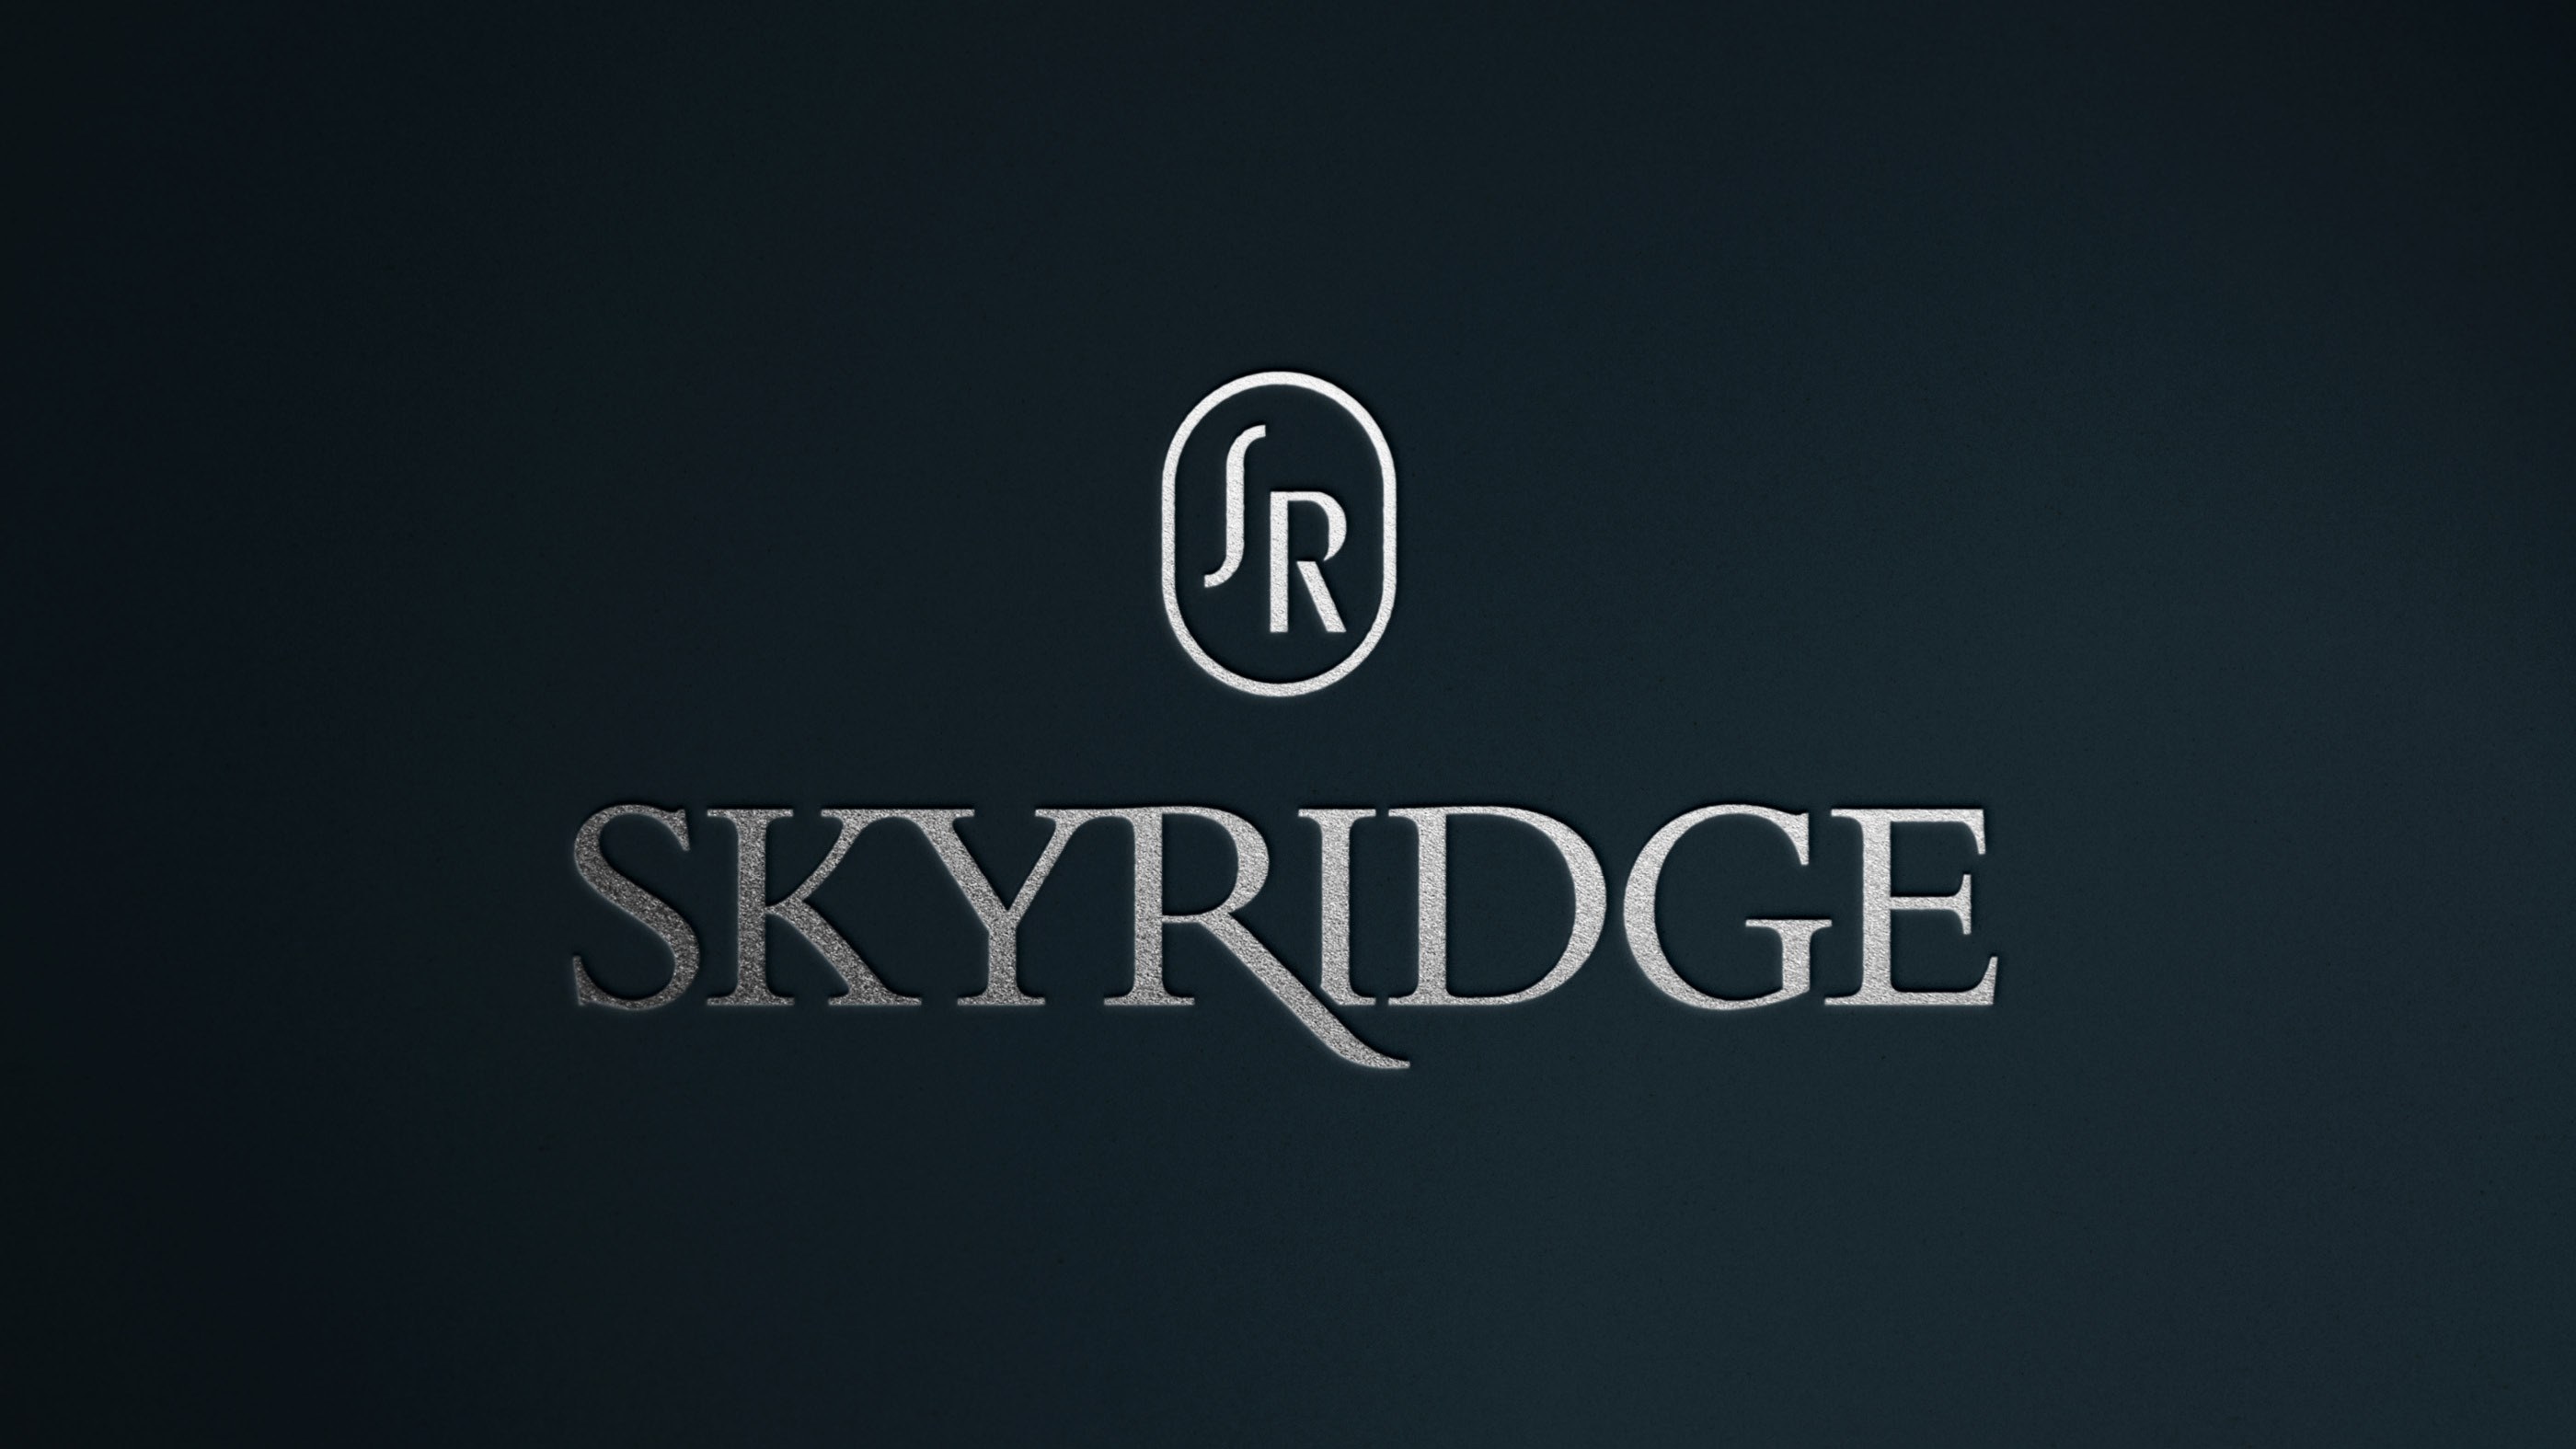 2 skyridge logo 2800x1575 image